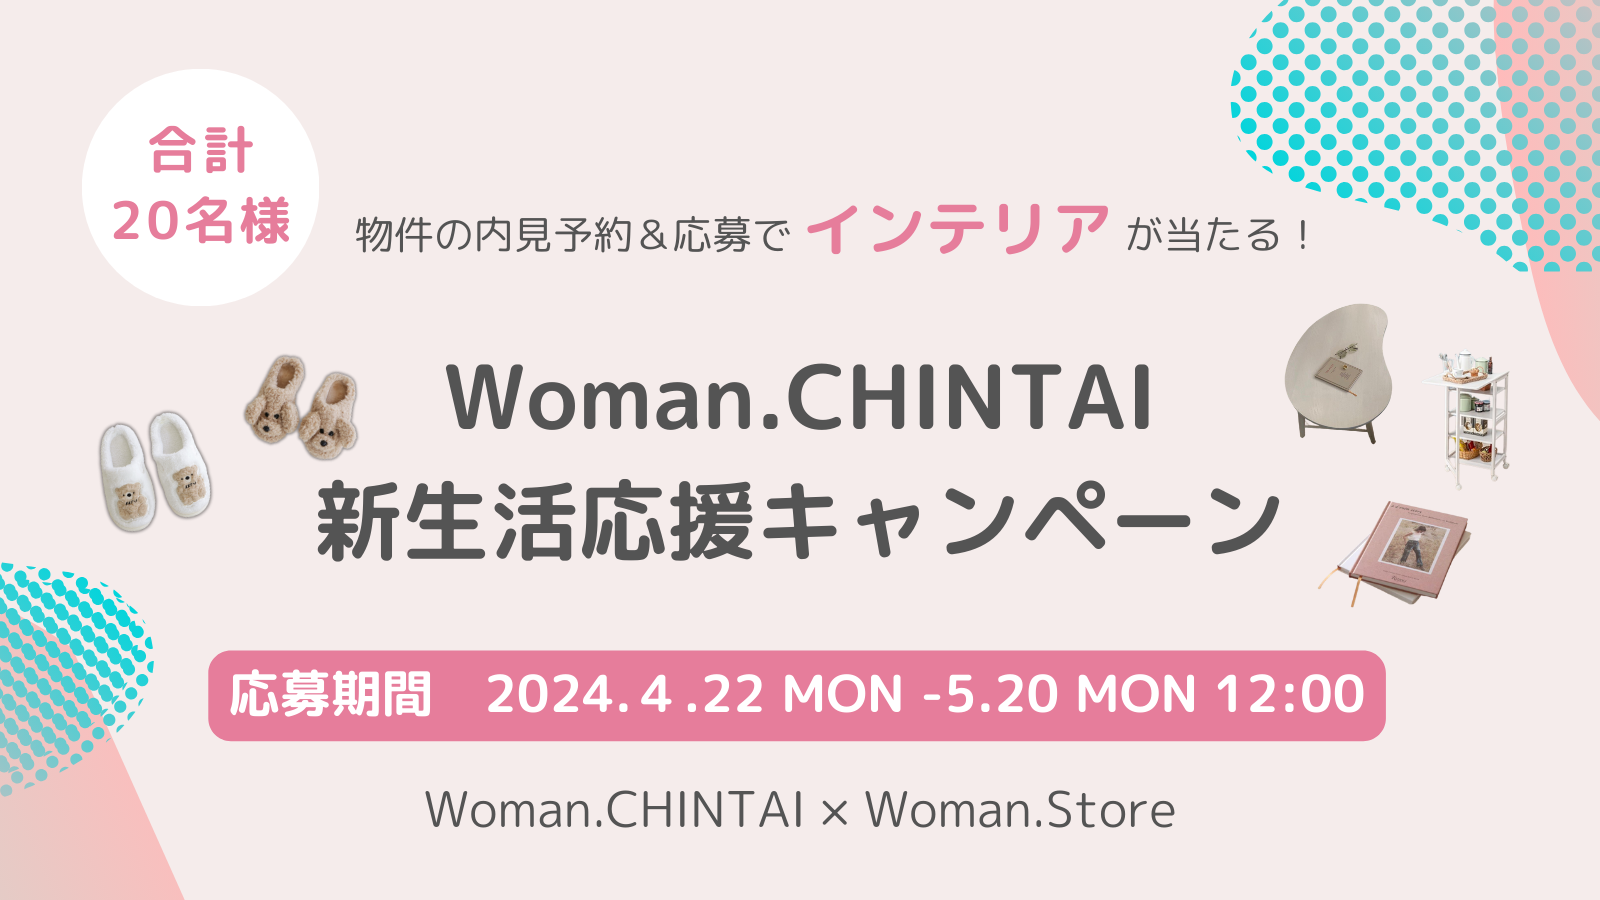 Woman.CHINTAI新生活応援キャンペーン